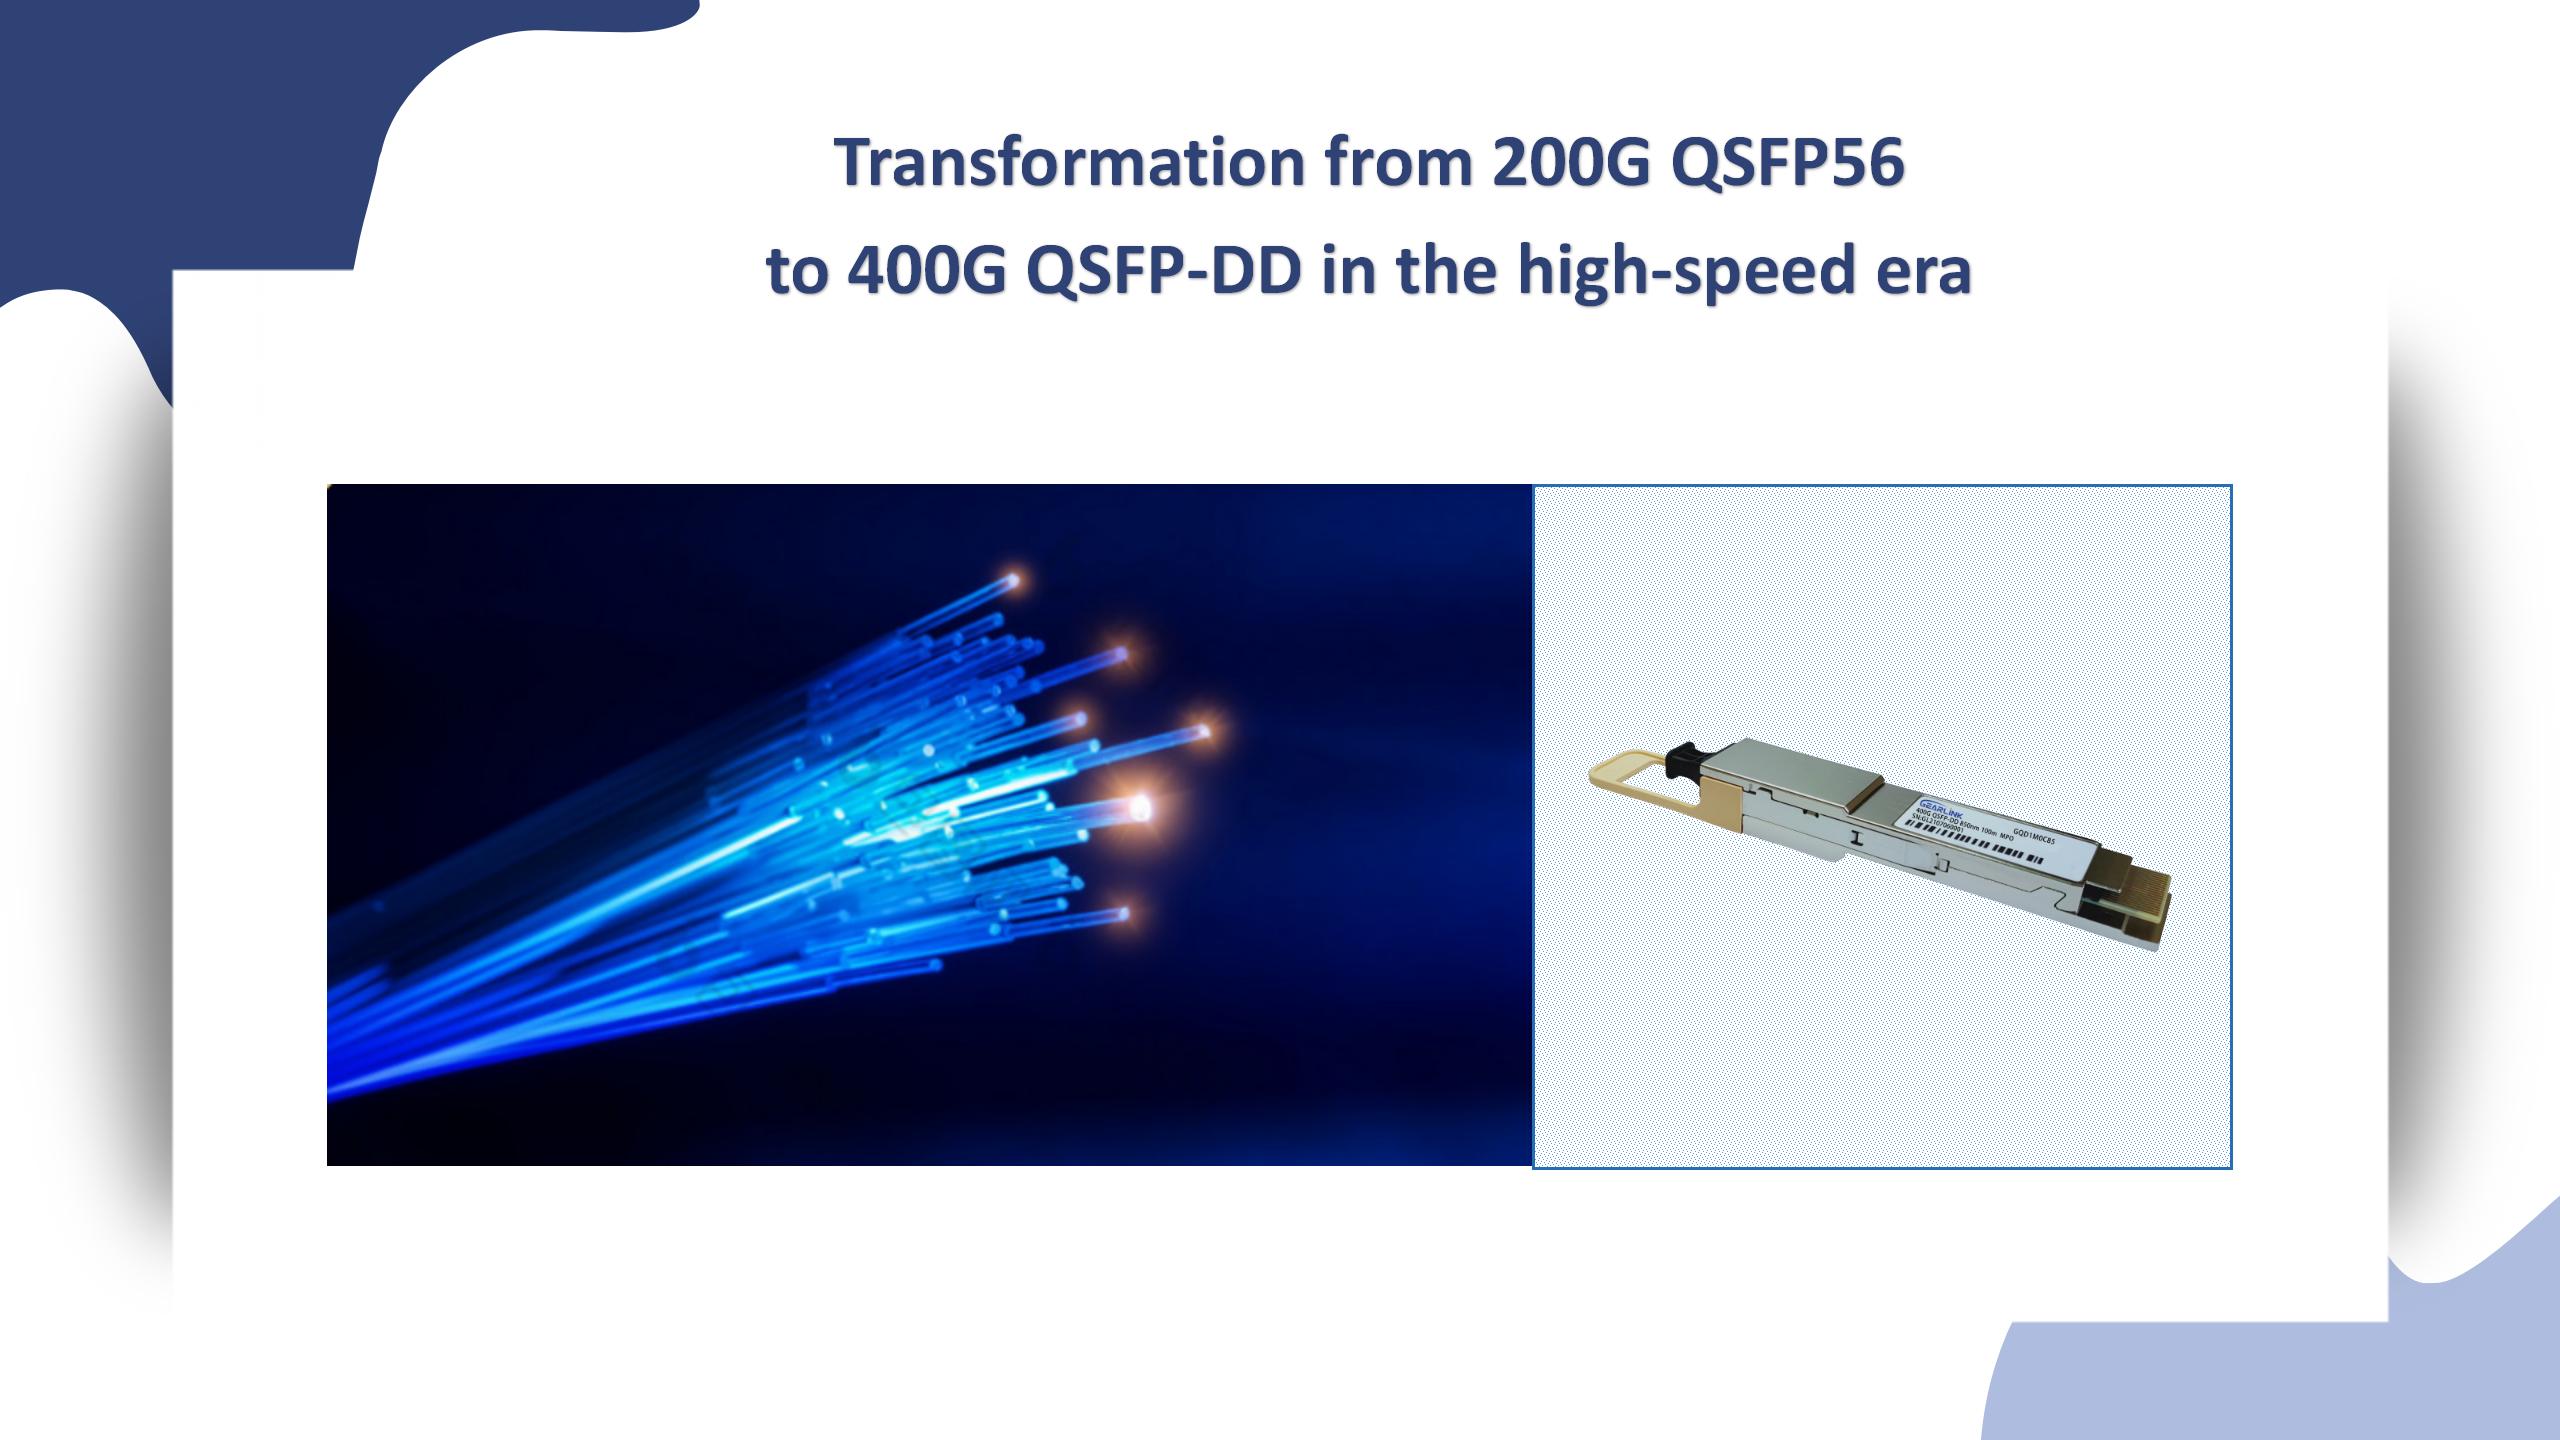 transformation-from-200g-qsfp56-to-400g-qsfp-dd-in-the-high-speed-era.jpg